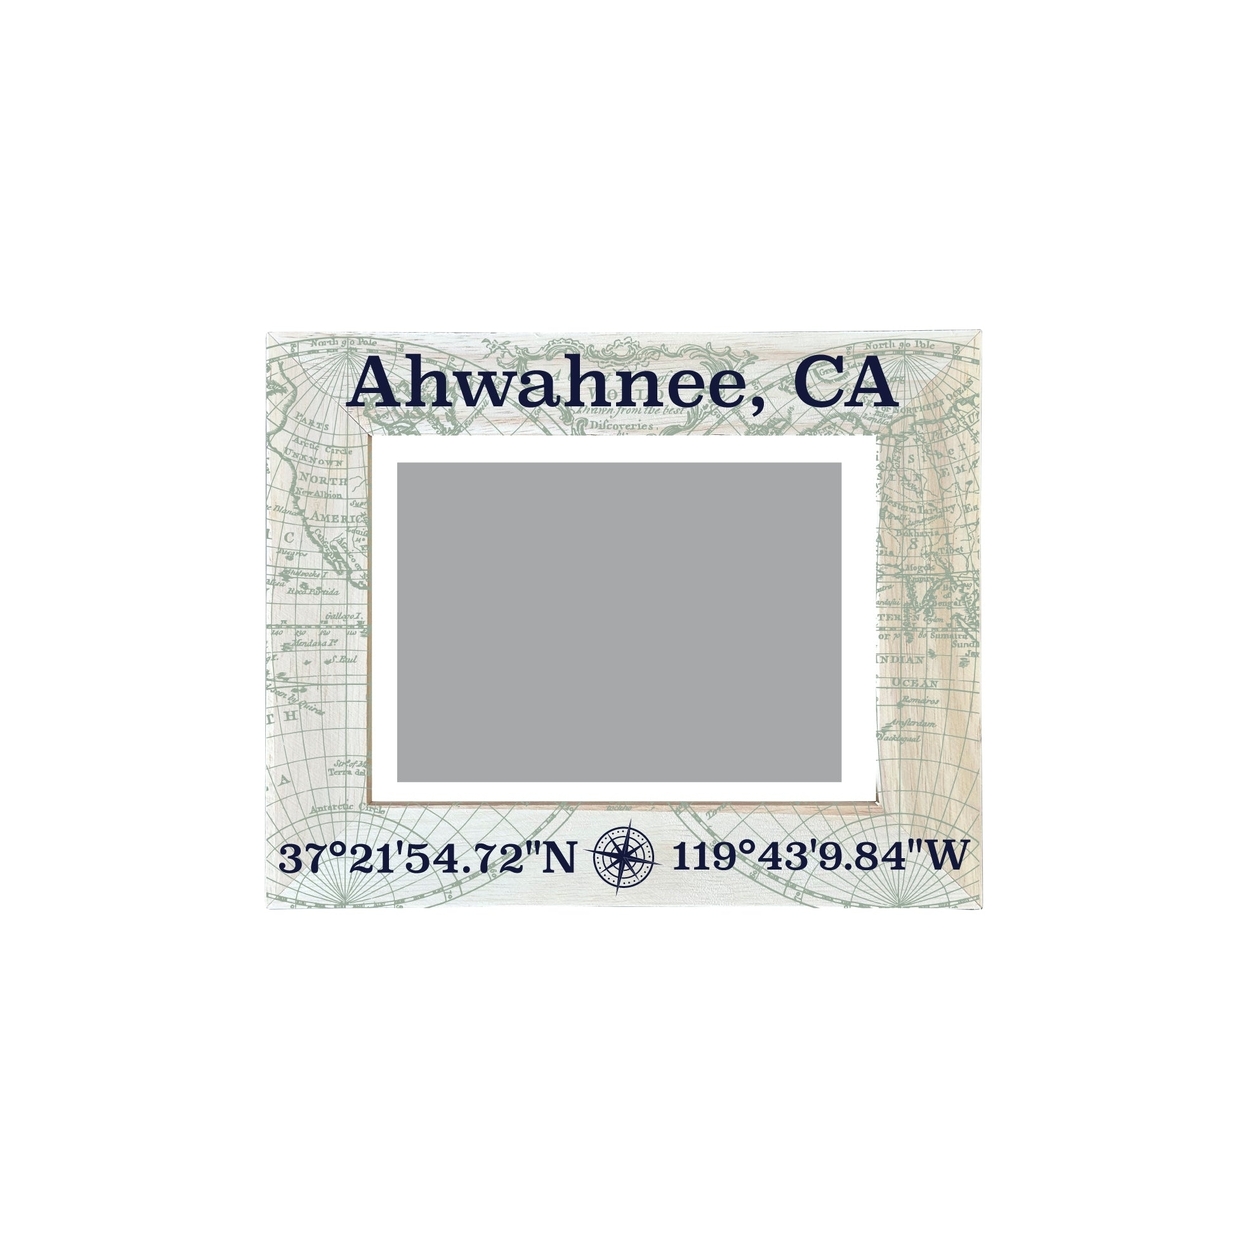 Ahwahnee California Souvenir Wooden Photo Frame Compass Coordinates Design Matted To 4 X 6